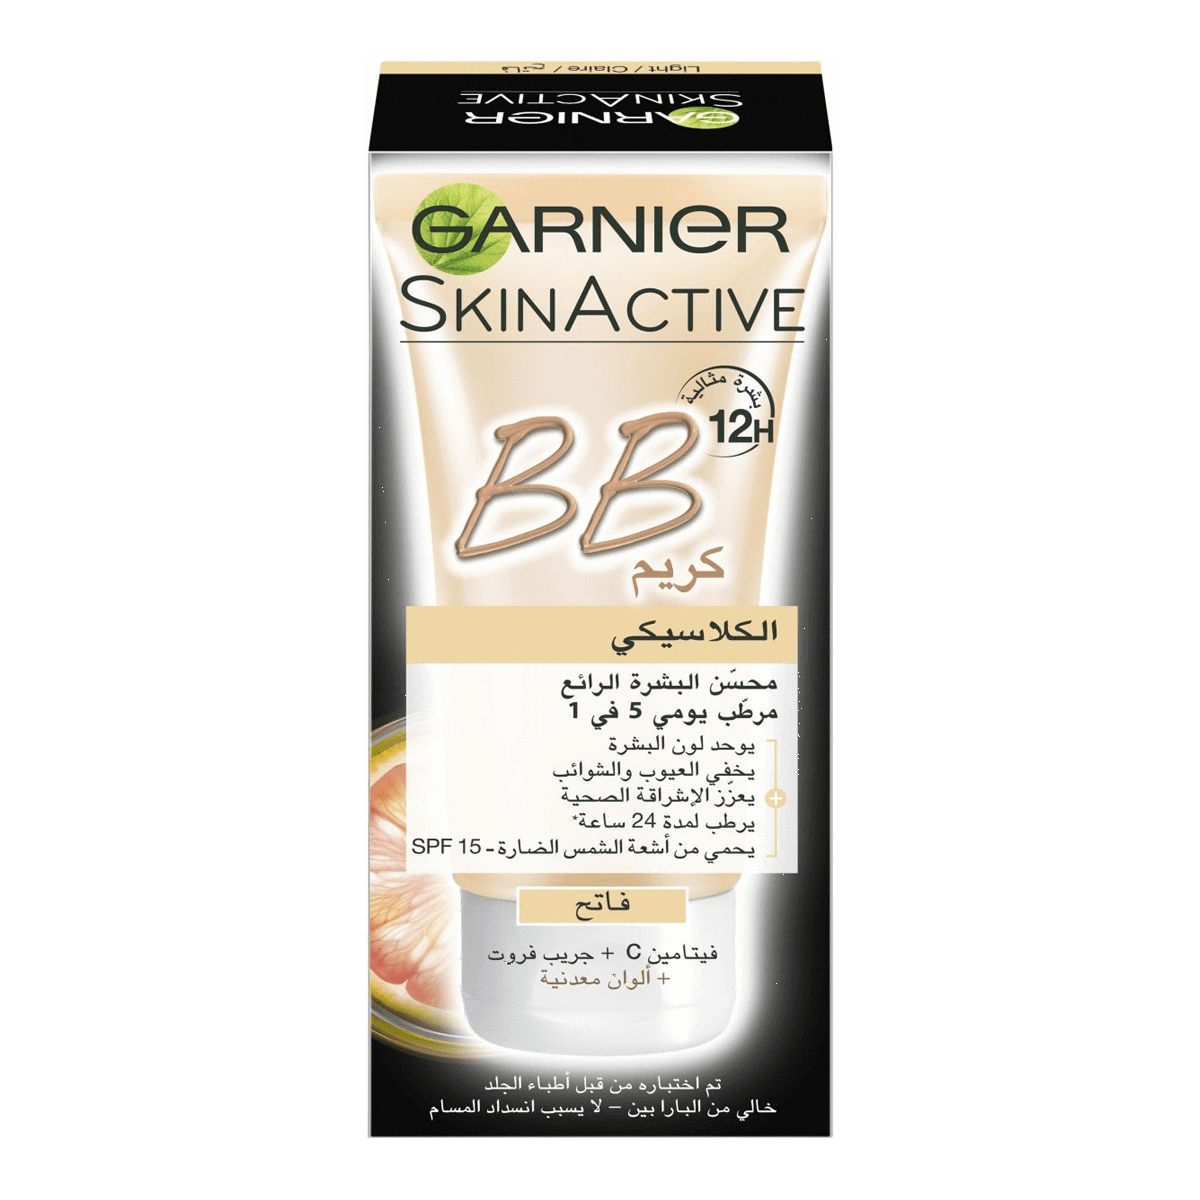 Garnier BB Cream Classic Light Shade